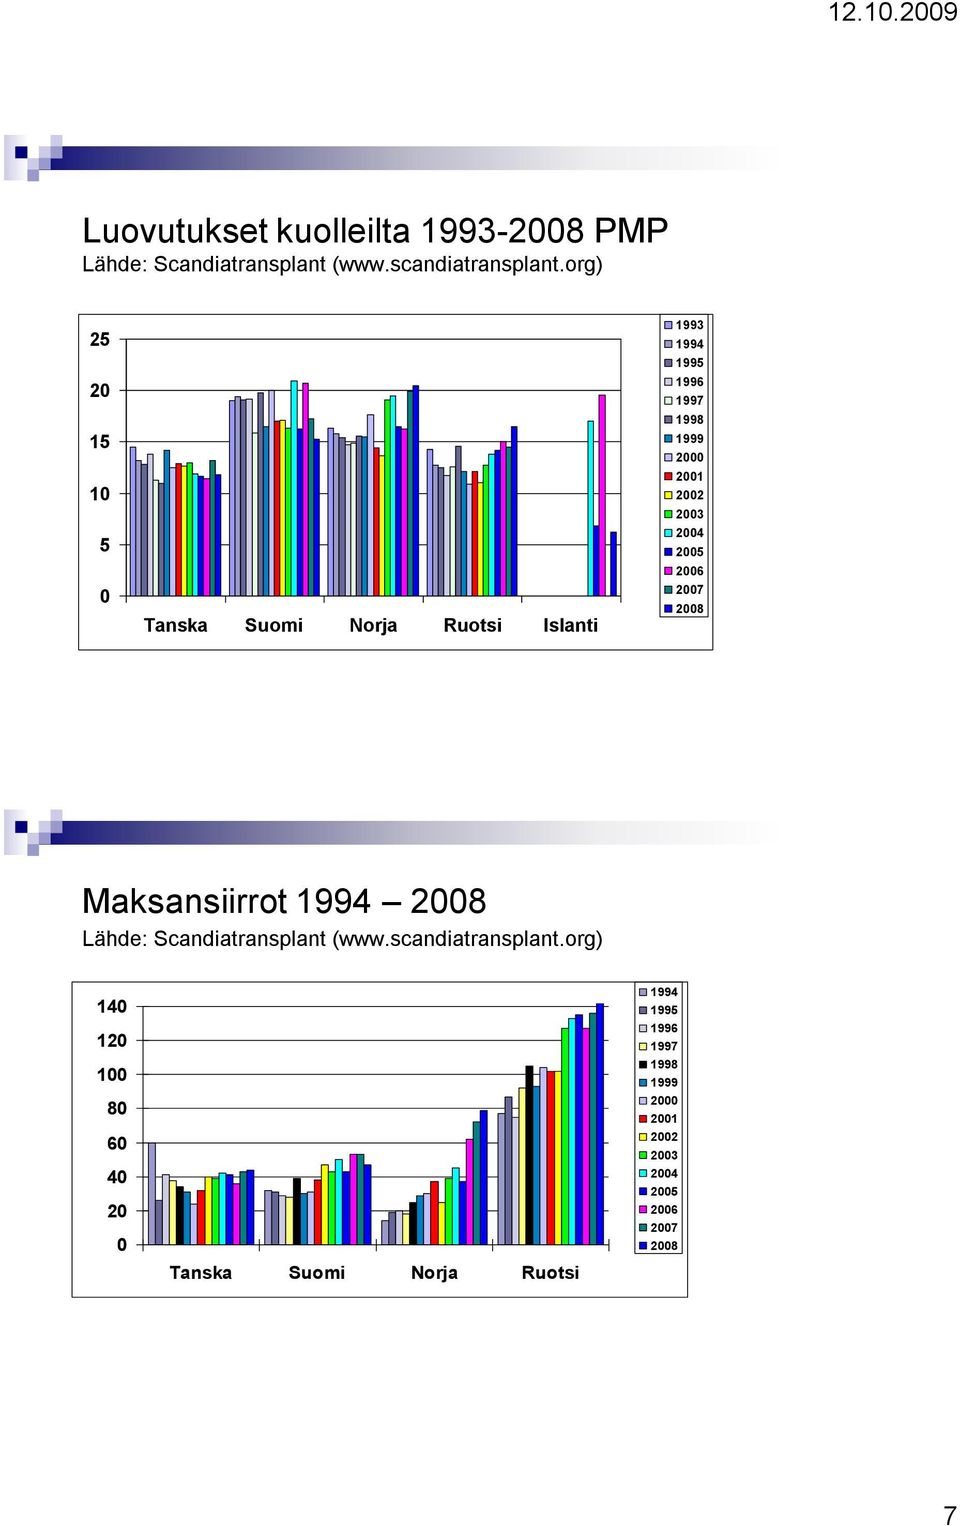 2006 2007 2008 Maksansiirrot 1994 2008 Lähde: Scandiatransplant (www.scandiatransplant.